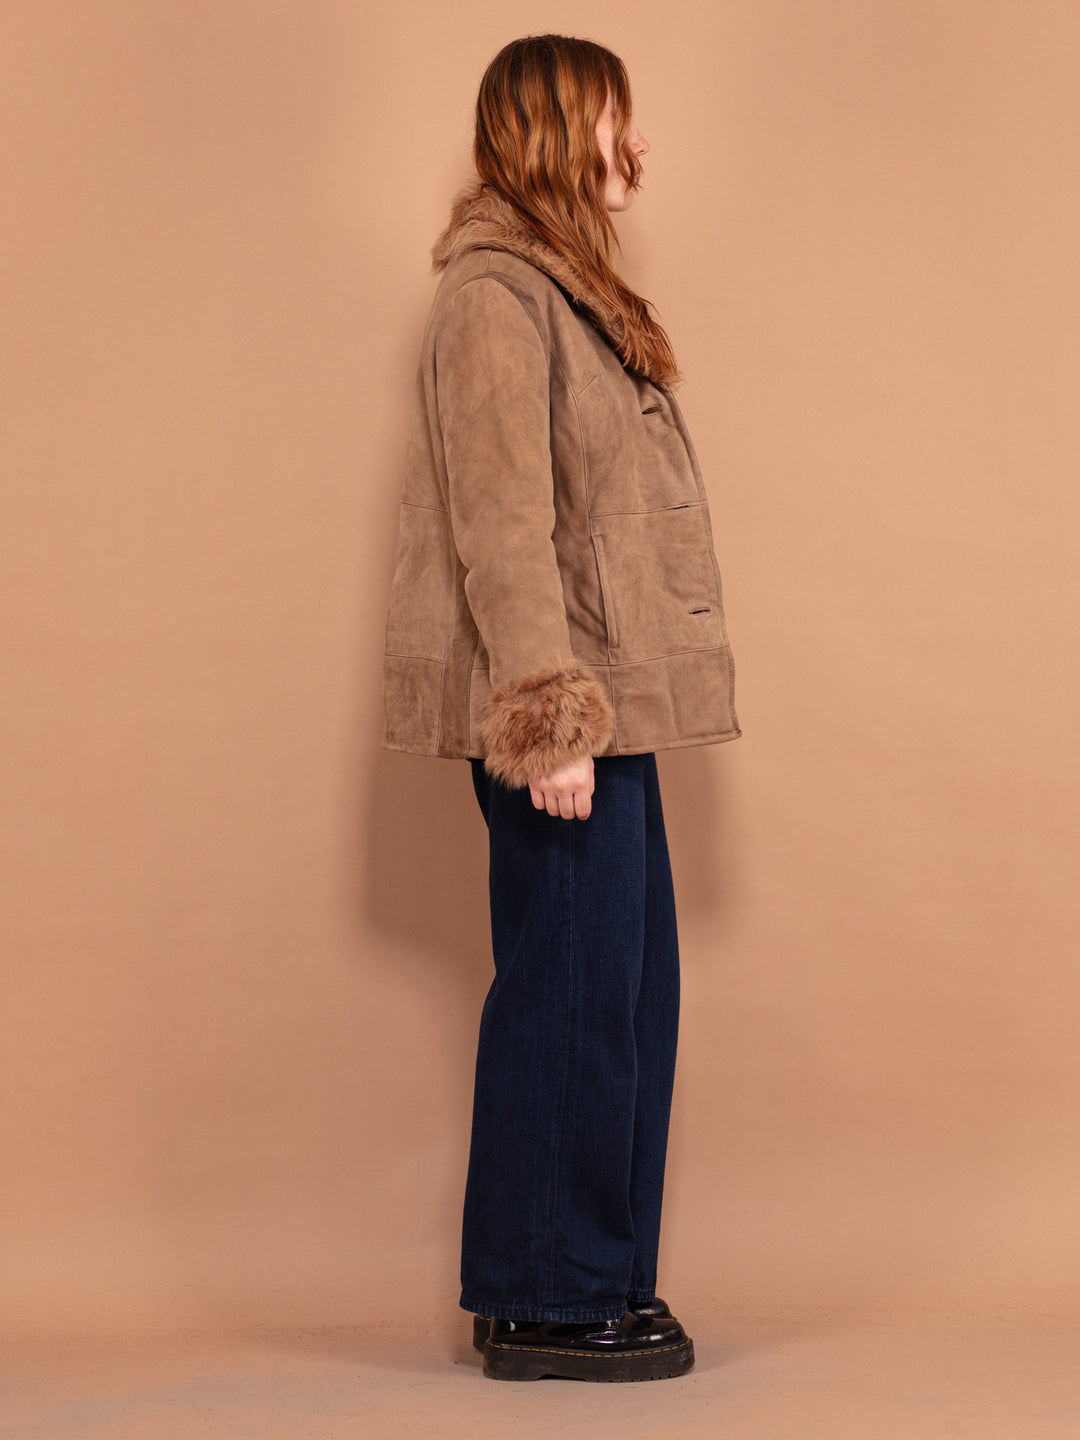 Penny Lane Sheepskin Coat 70s, Size M Medium, Women Vintage Short Fitted Penny Lane Jacket, Boho Light Brown Suede Coat, Hippie Afghan Coat